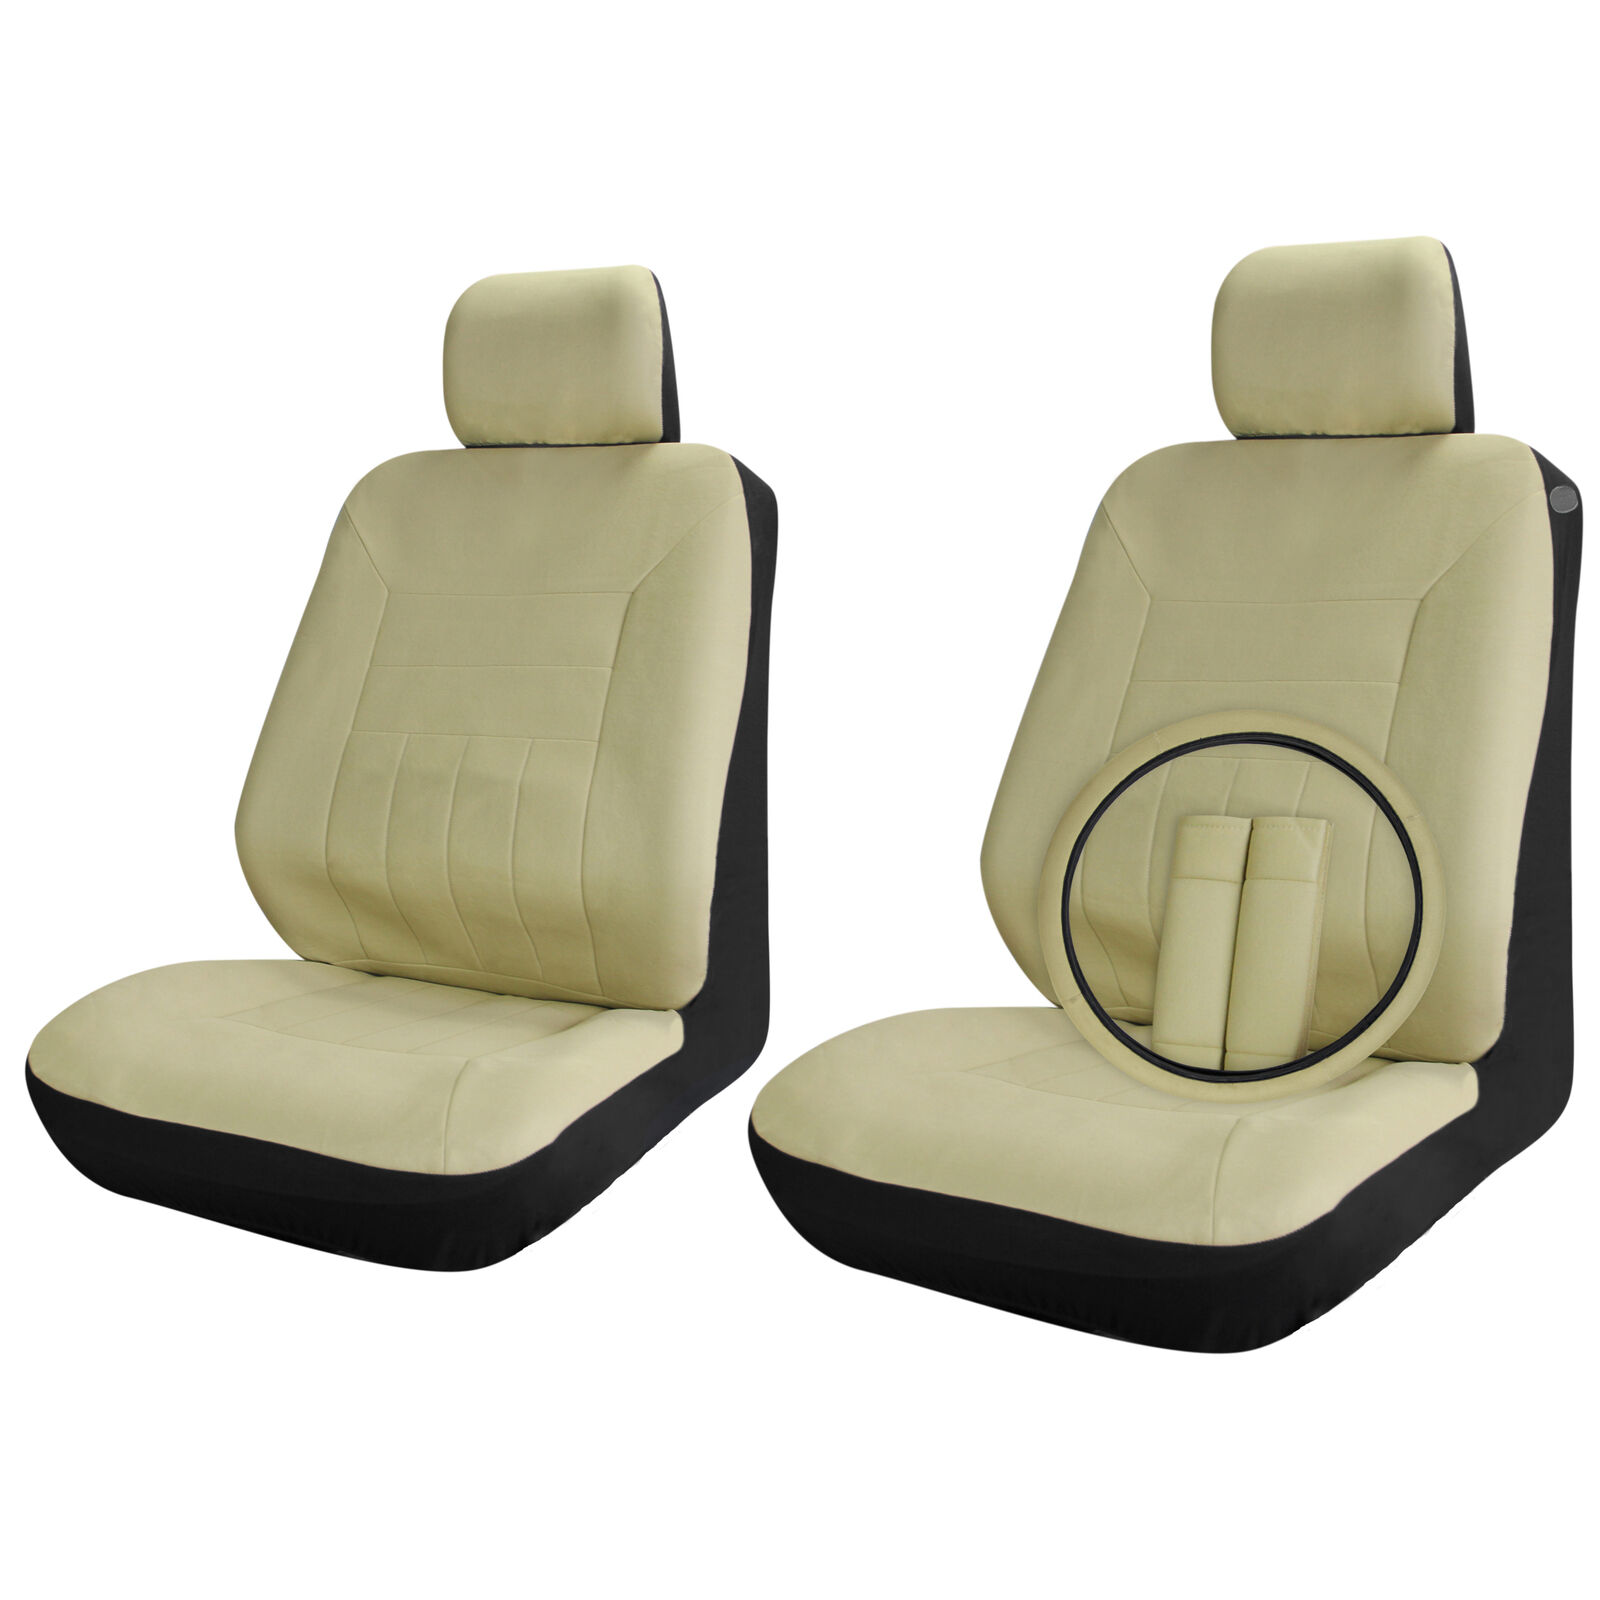 SC004STN-09, Beige Tan Mesh Seat Cover,9pcs / set